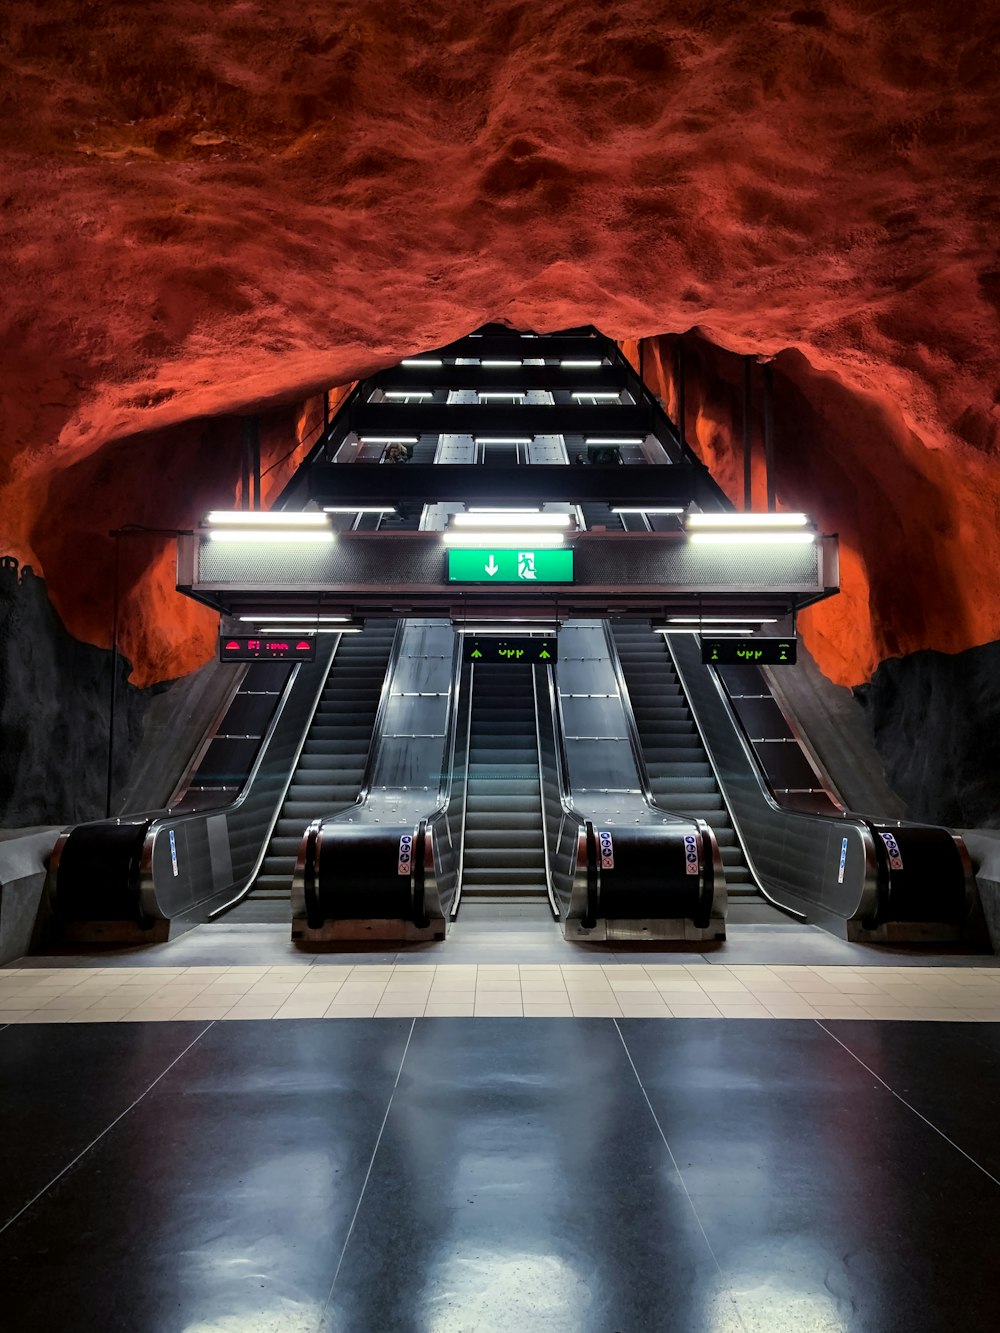 black and white escalator in a tunnel